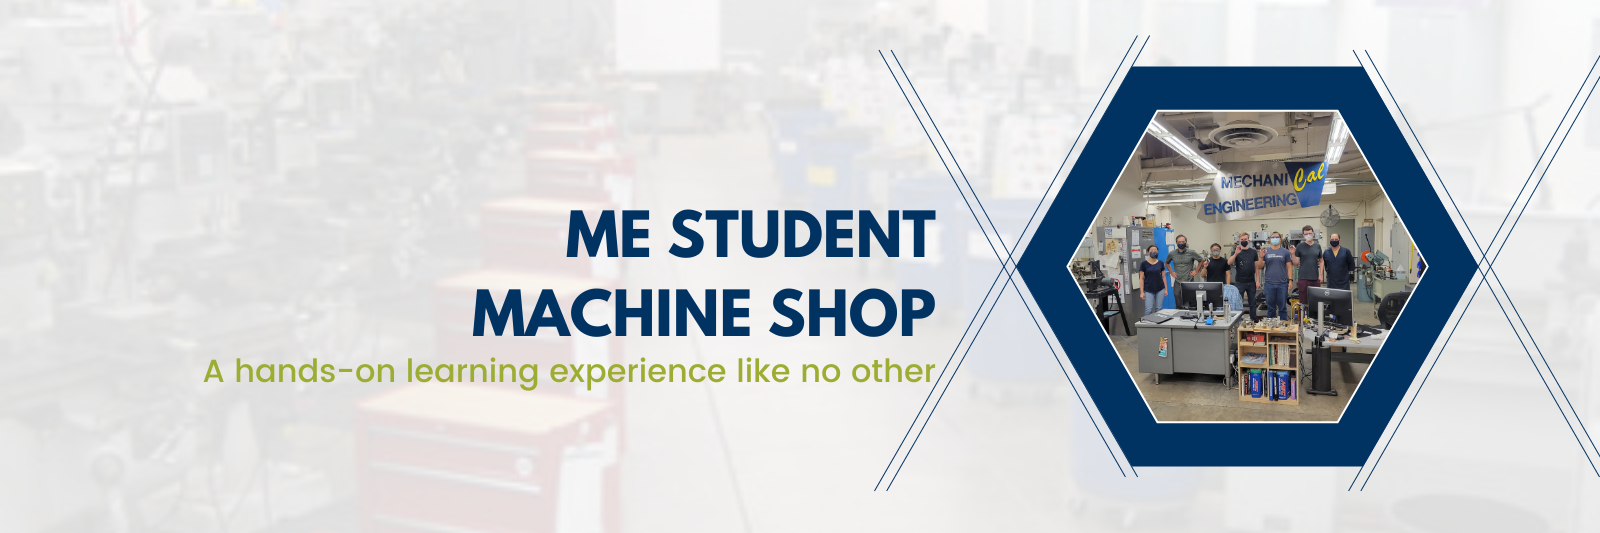 Student Machine Shop